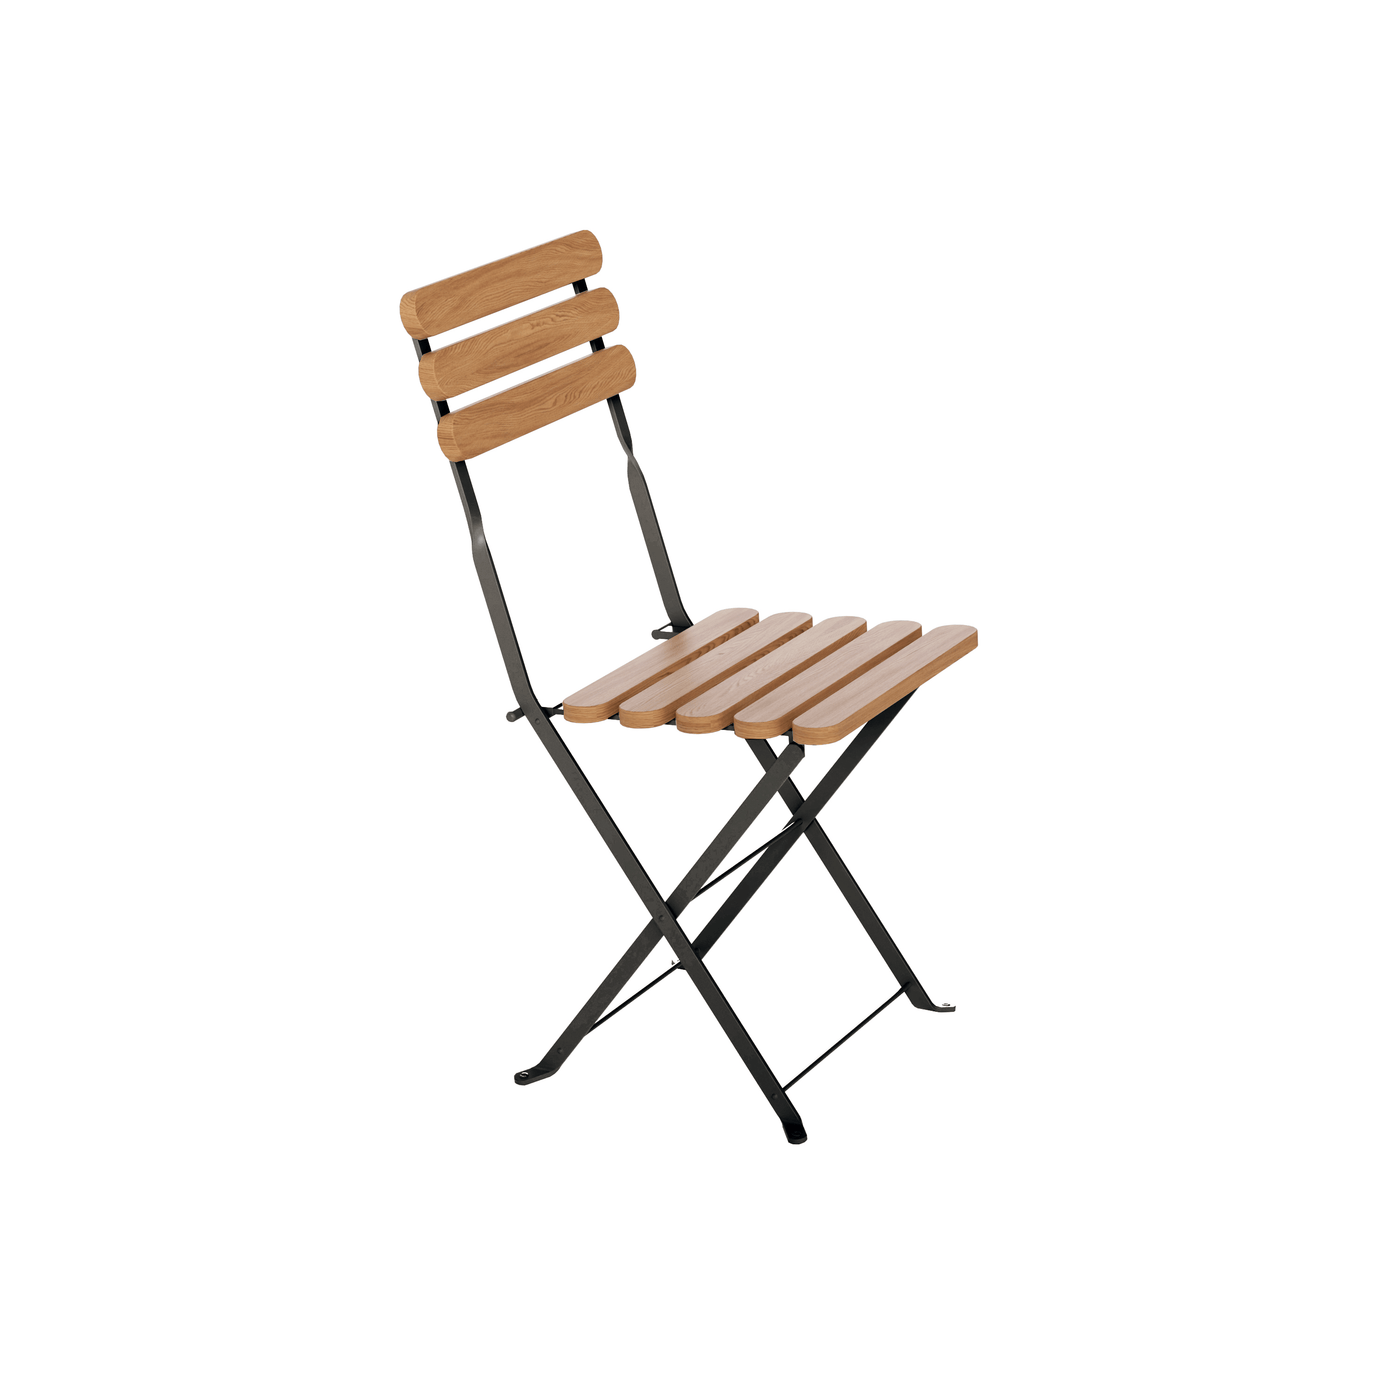 Bistro Metal Foldable Garden Chairs, Black (Set of 2)